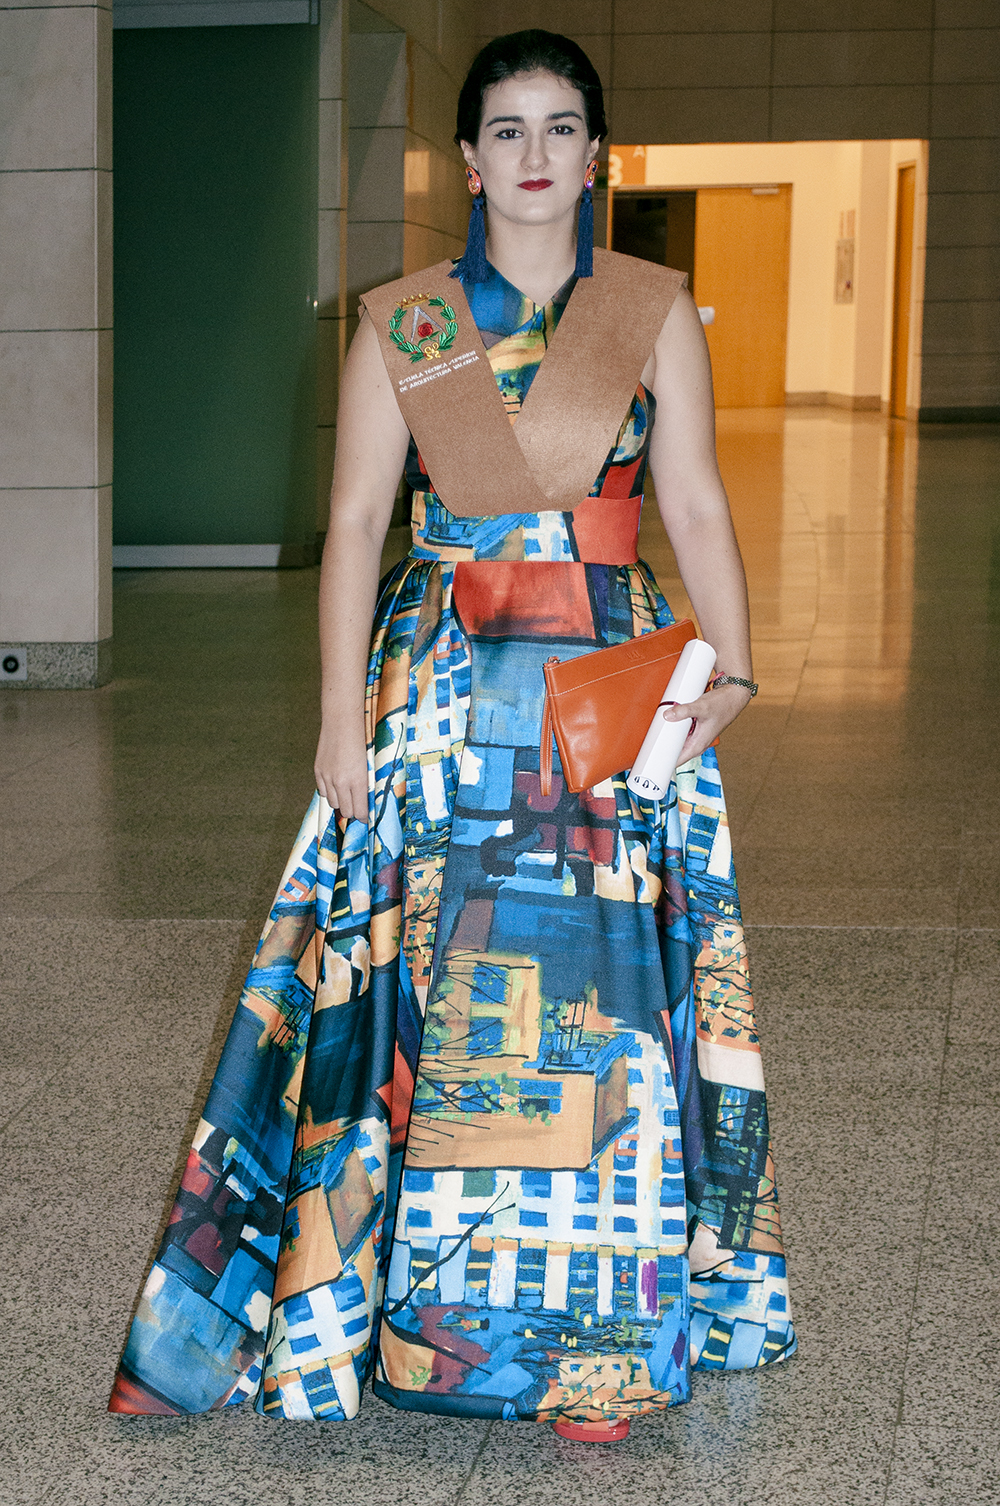 fashion blogger spain somethingfashion valencia graduation college ceremony outfit dress architecture5